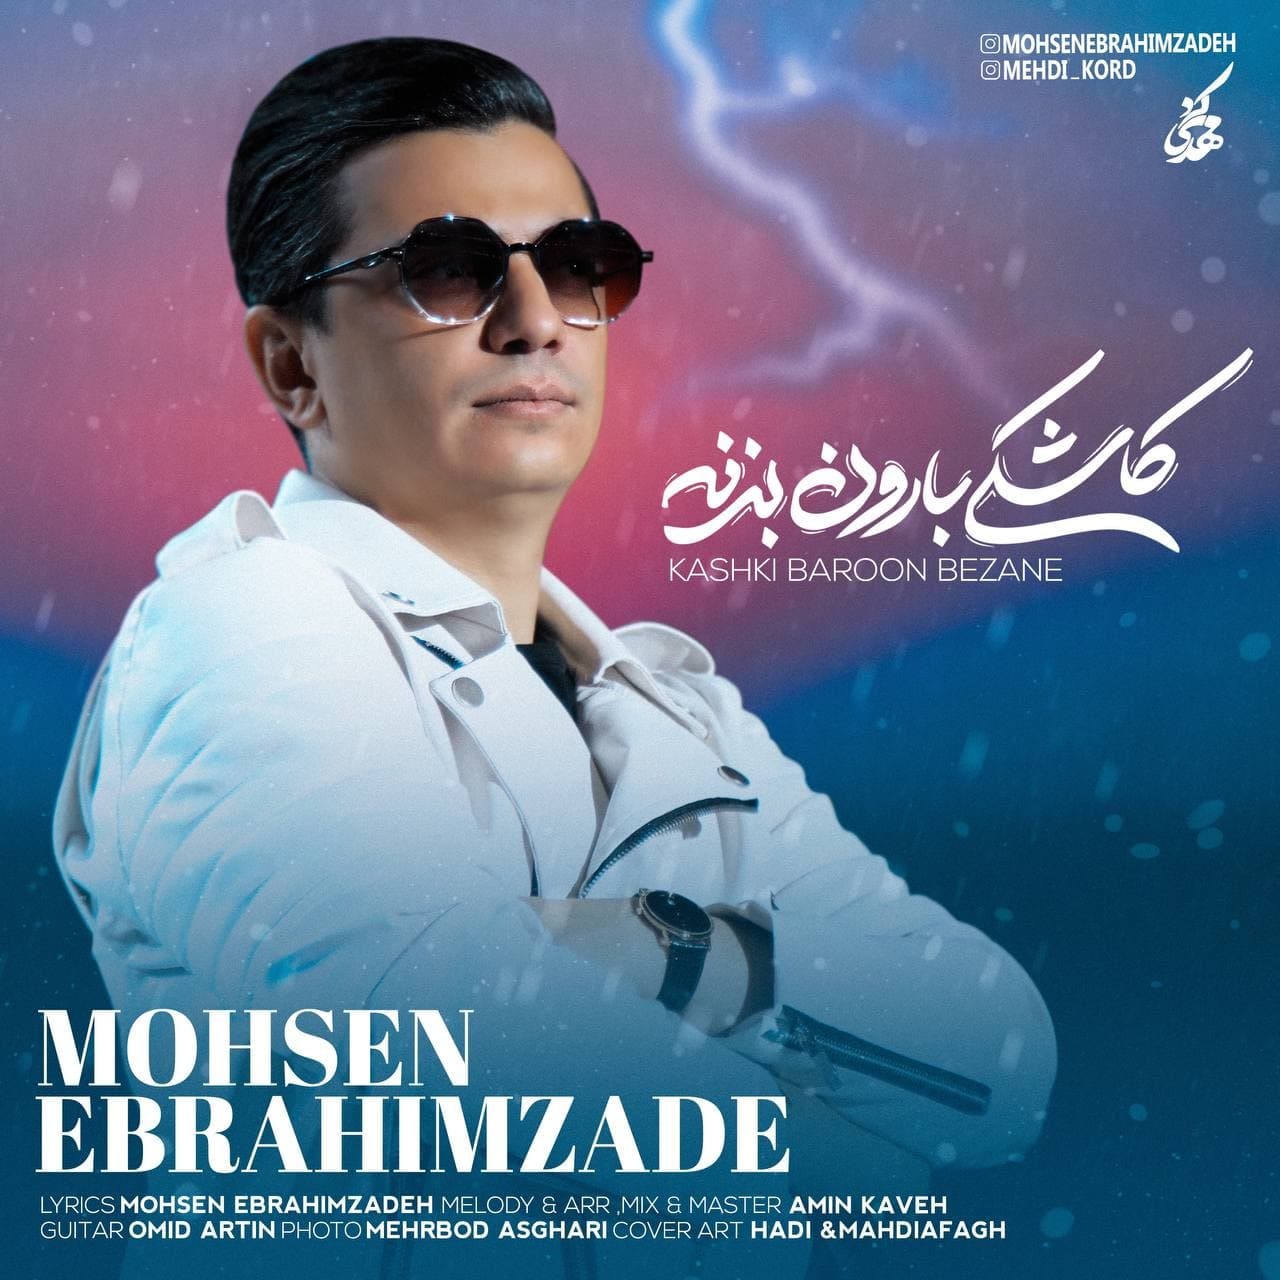 Mohsen Ebrahimzadeh - Kashki Baroon Bezane - دانلود آهنگ محسن ابراهیم زاده به نام کاشکی بارون بزنه 